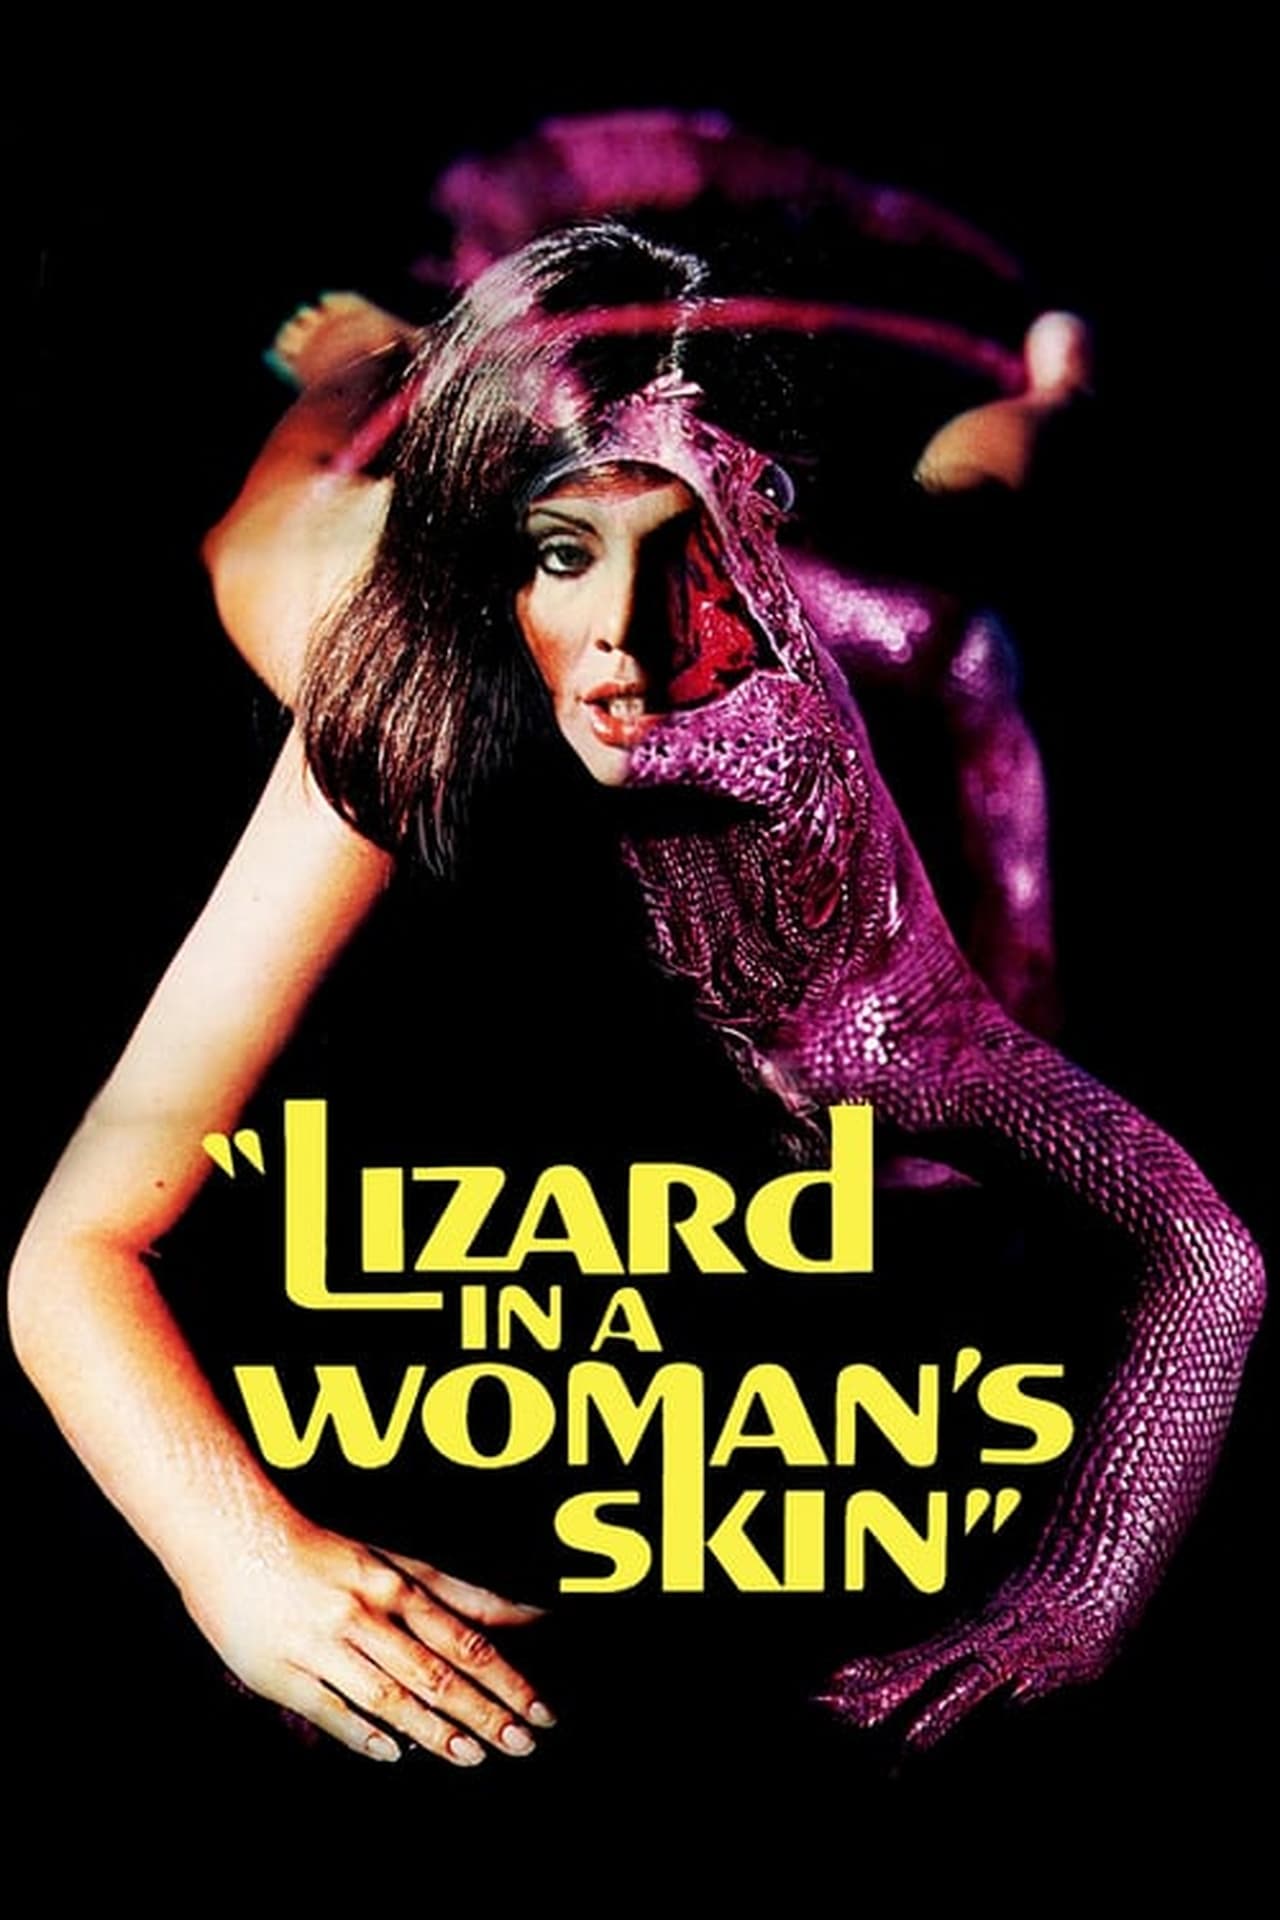 A Lizard in a Woman's Skin poster